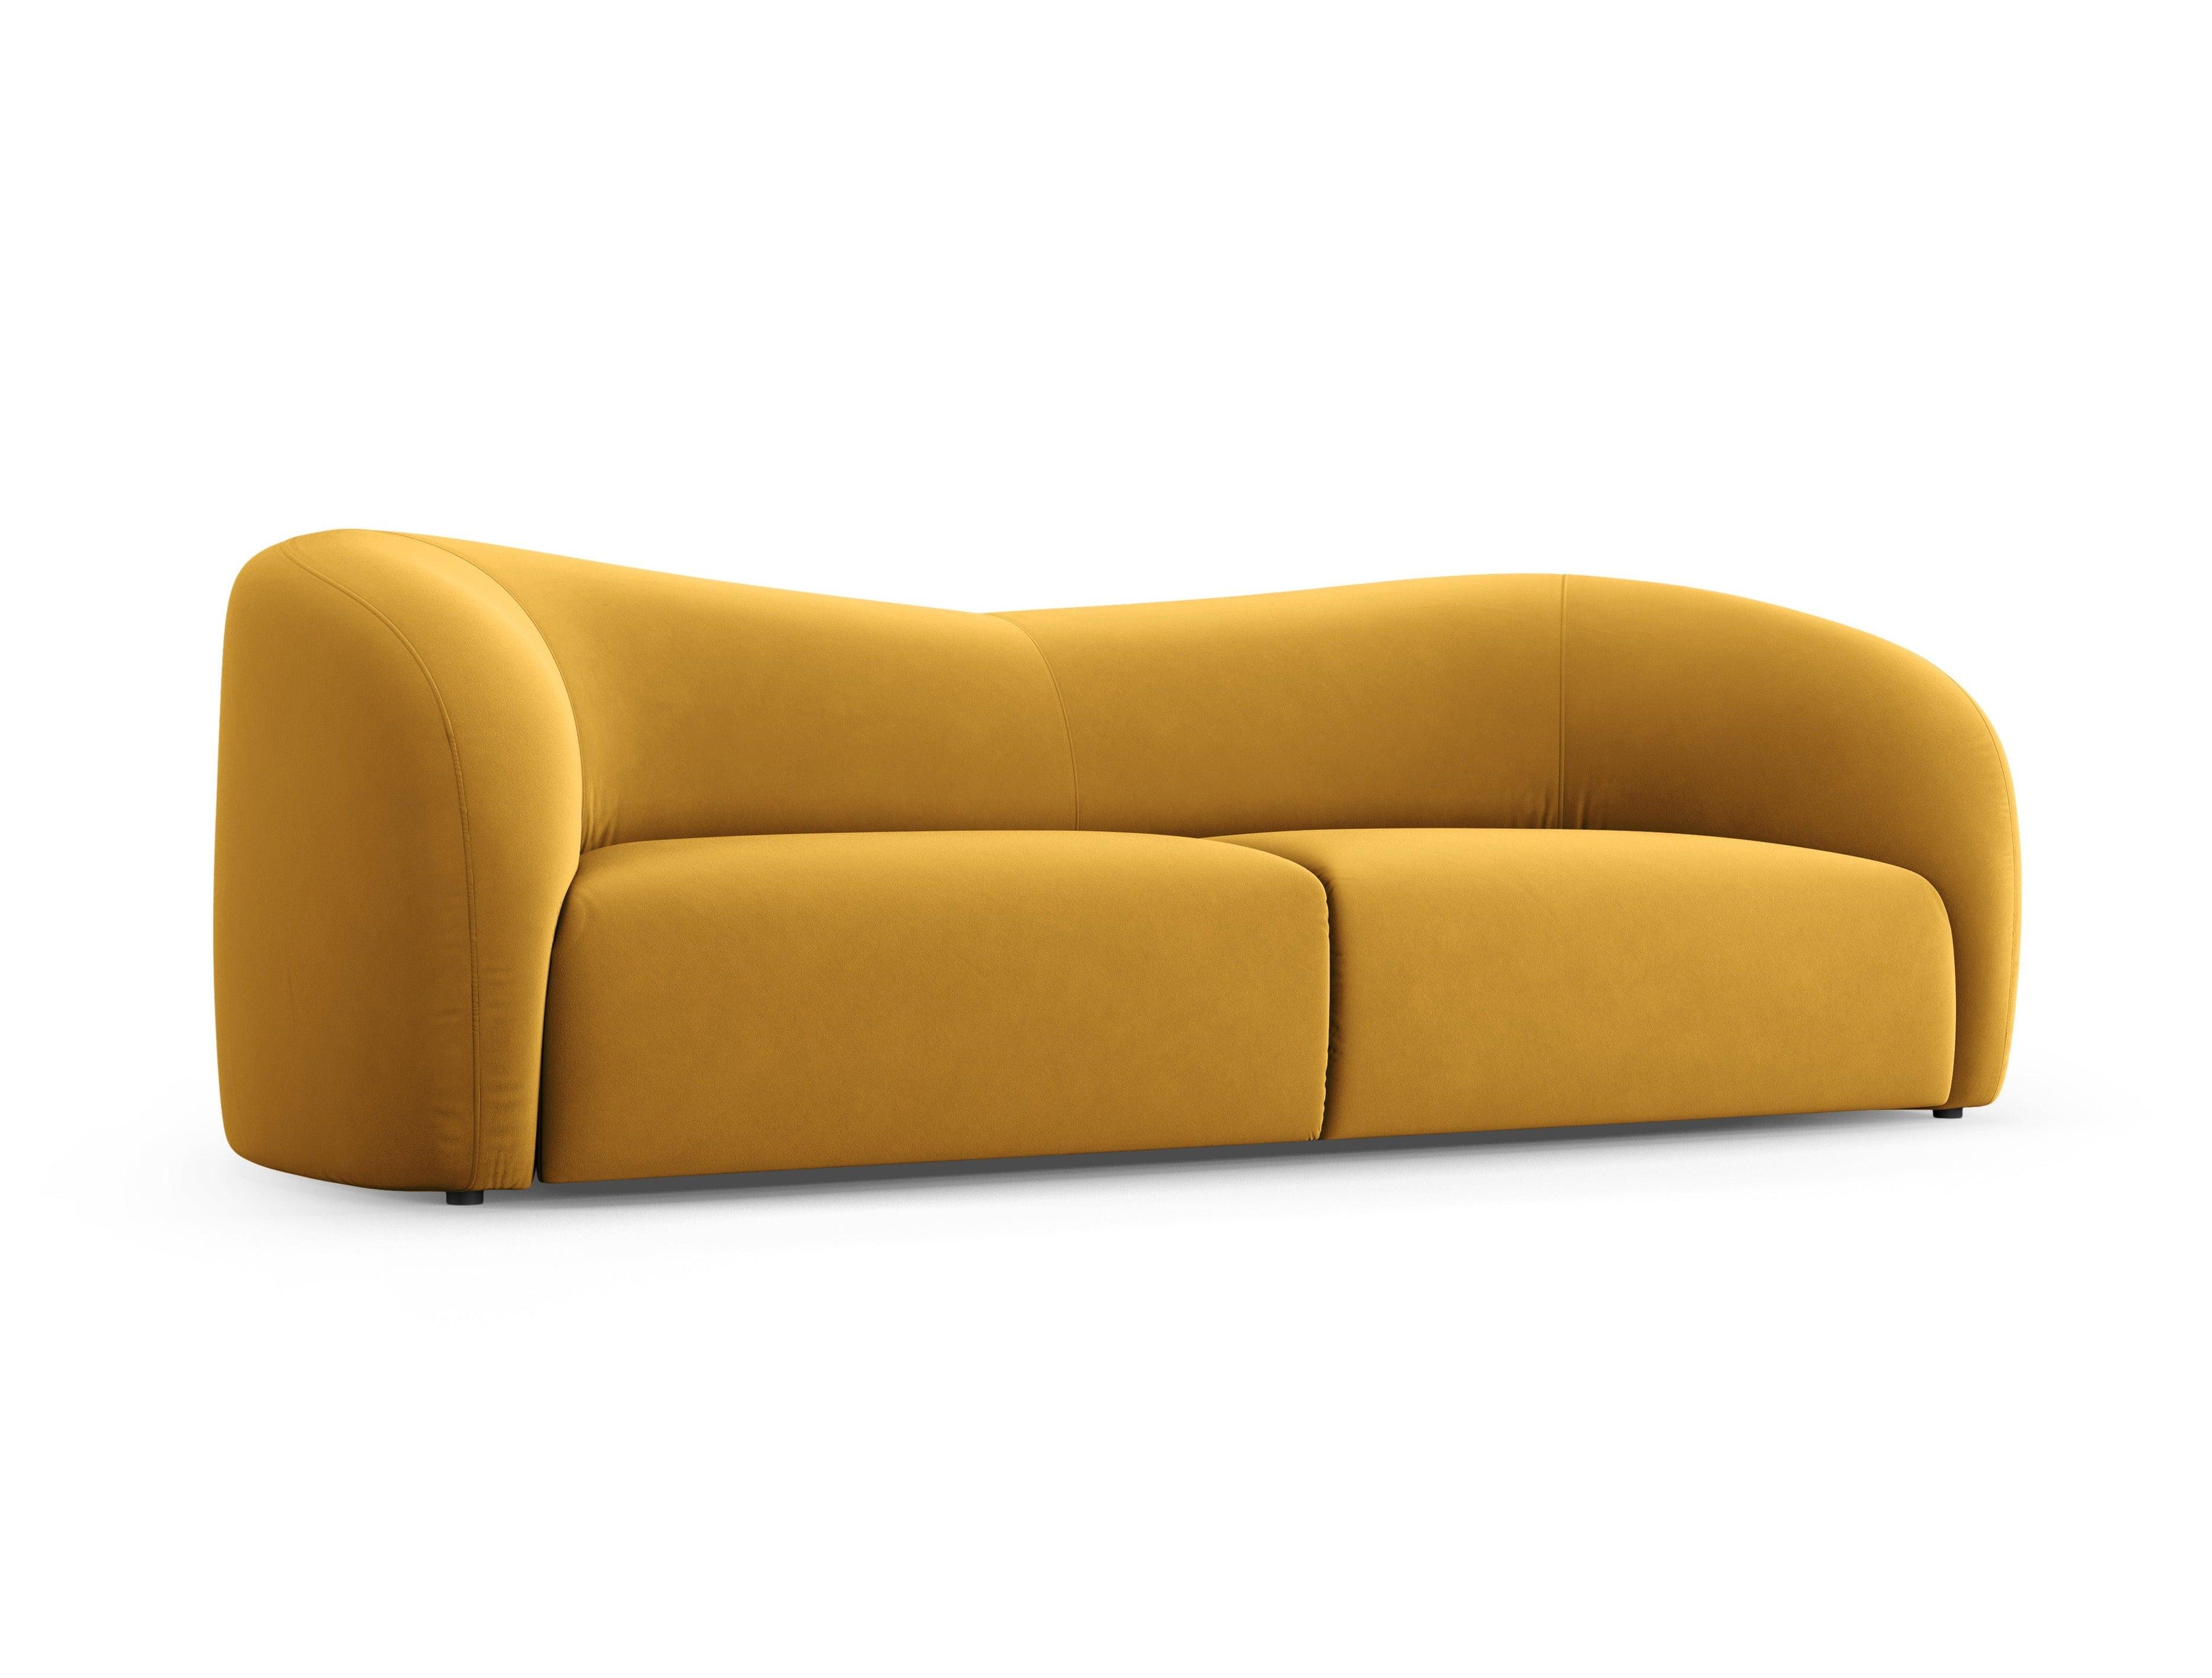 Velvet Sofa, "Santi", 3 Seats, Yellow, 237x90x75
Made in Europe Interieurs 86    Eye on Design